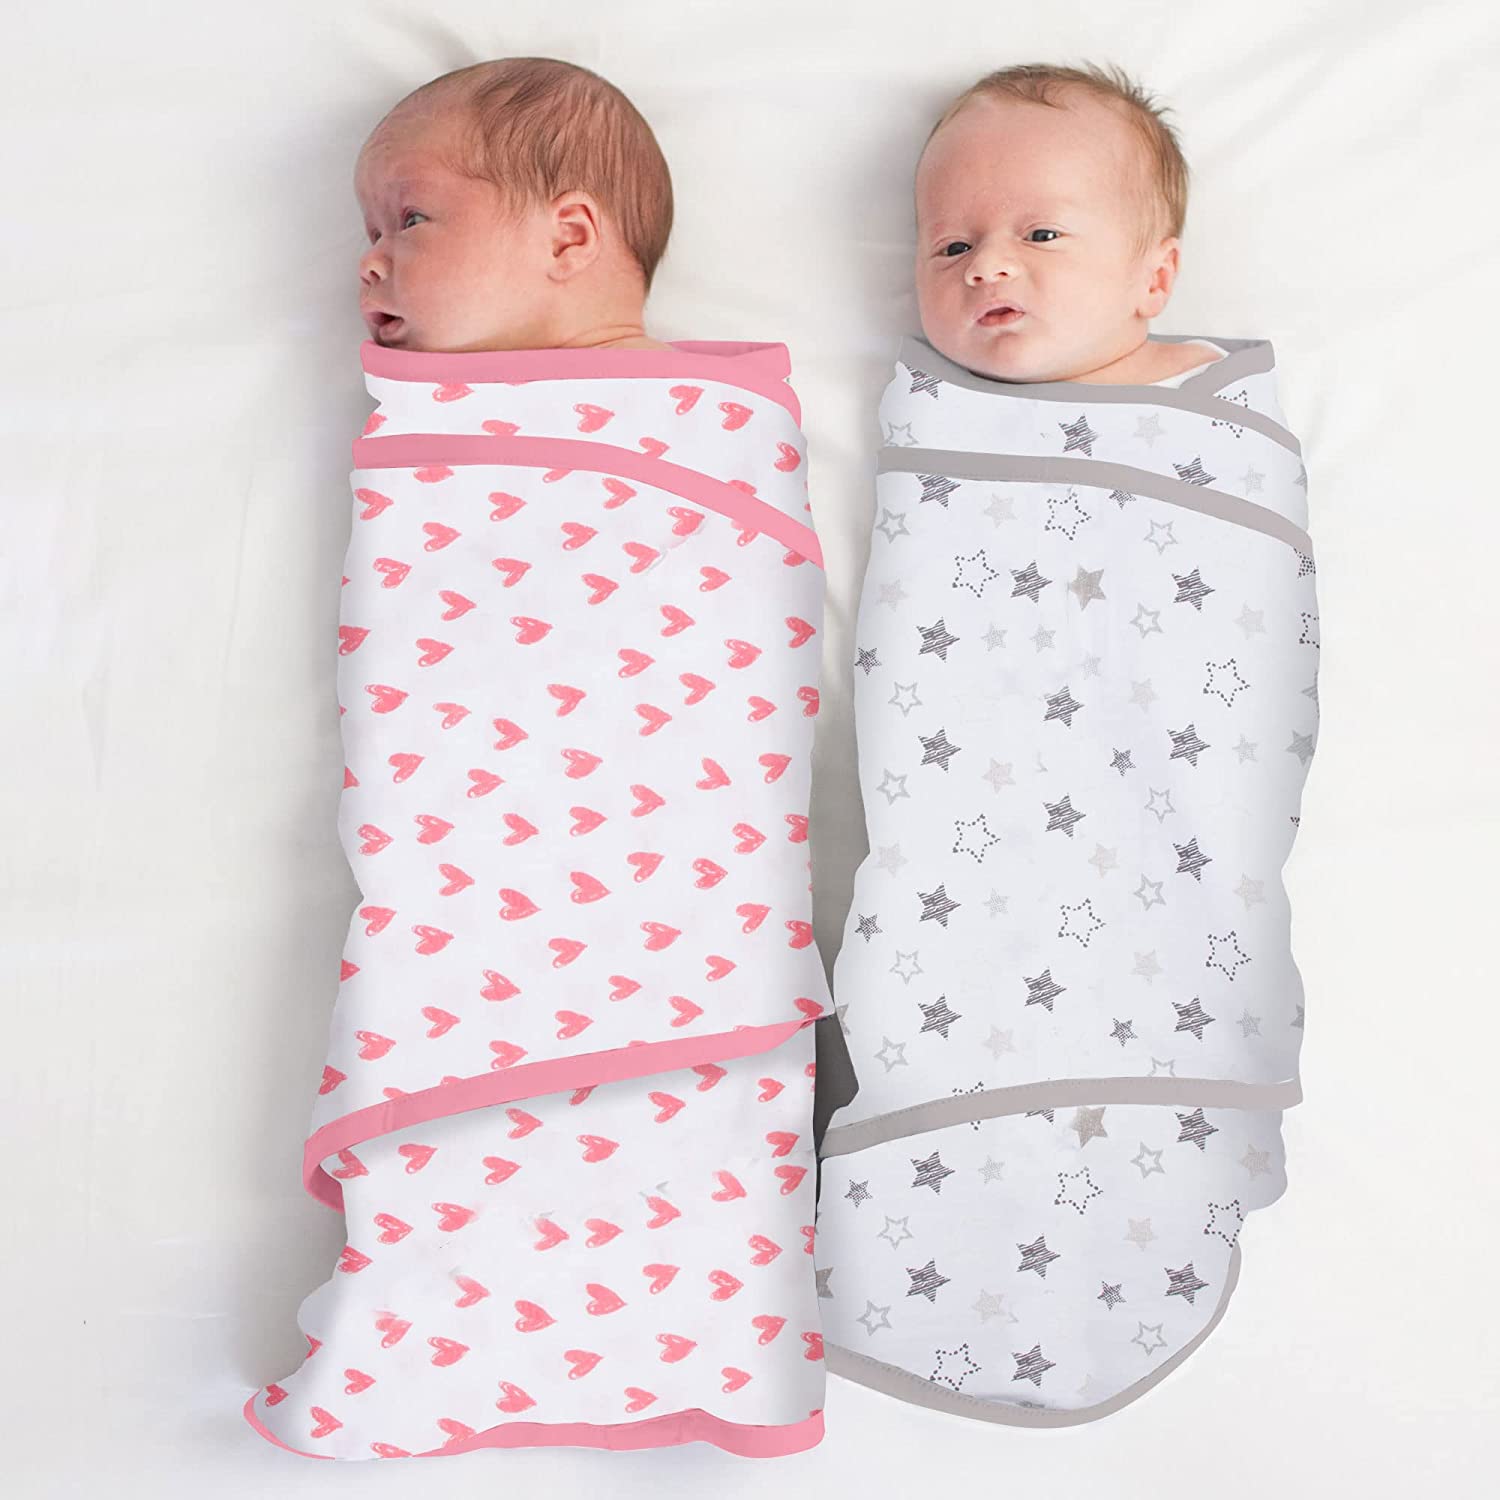 Miracle Blanket Baby Swaddle Prints: